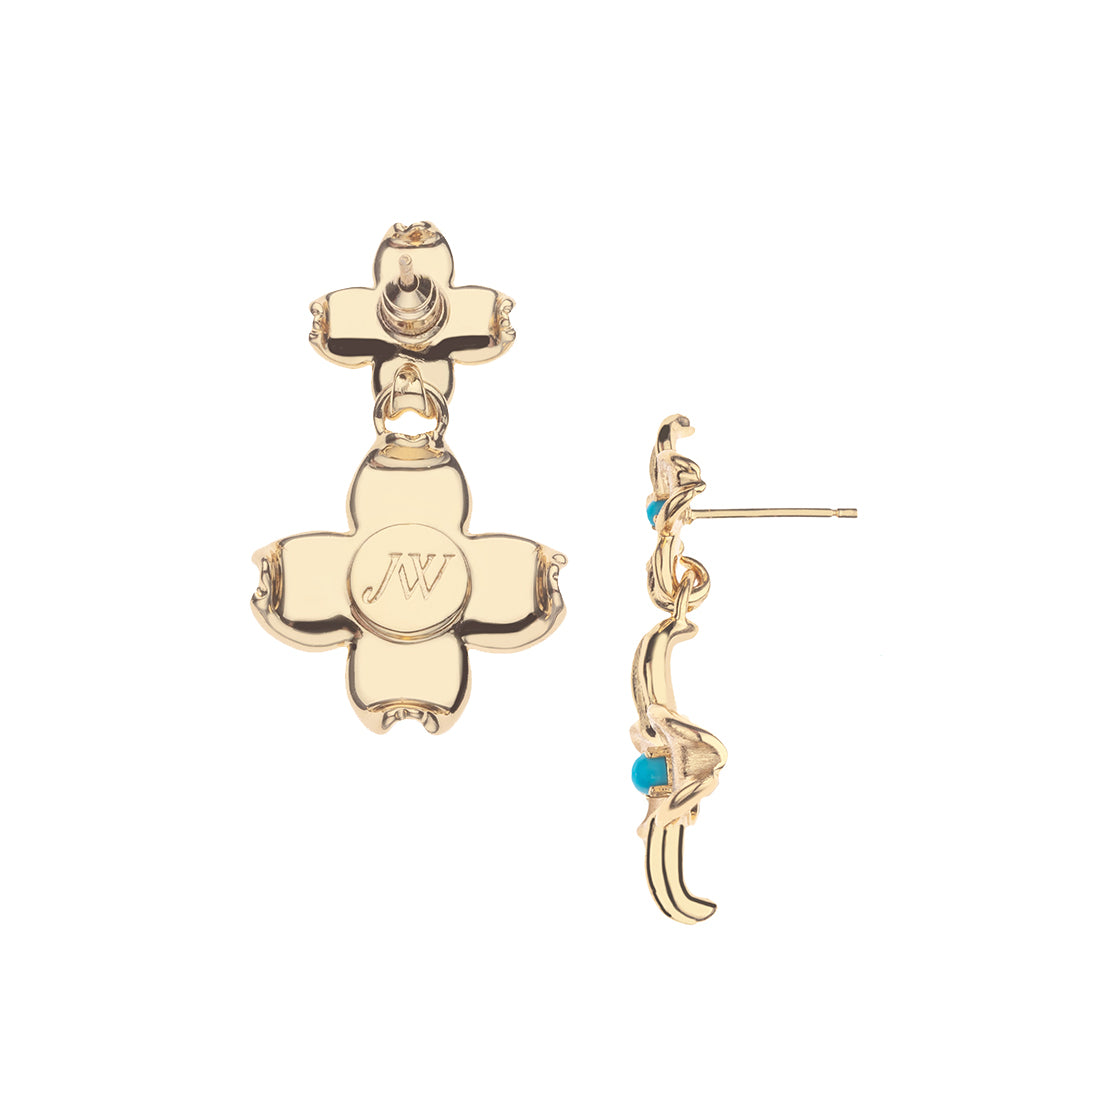 JOY Dogwood Flower Earrings with Turquoise Stones